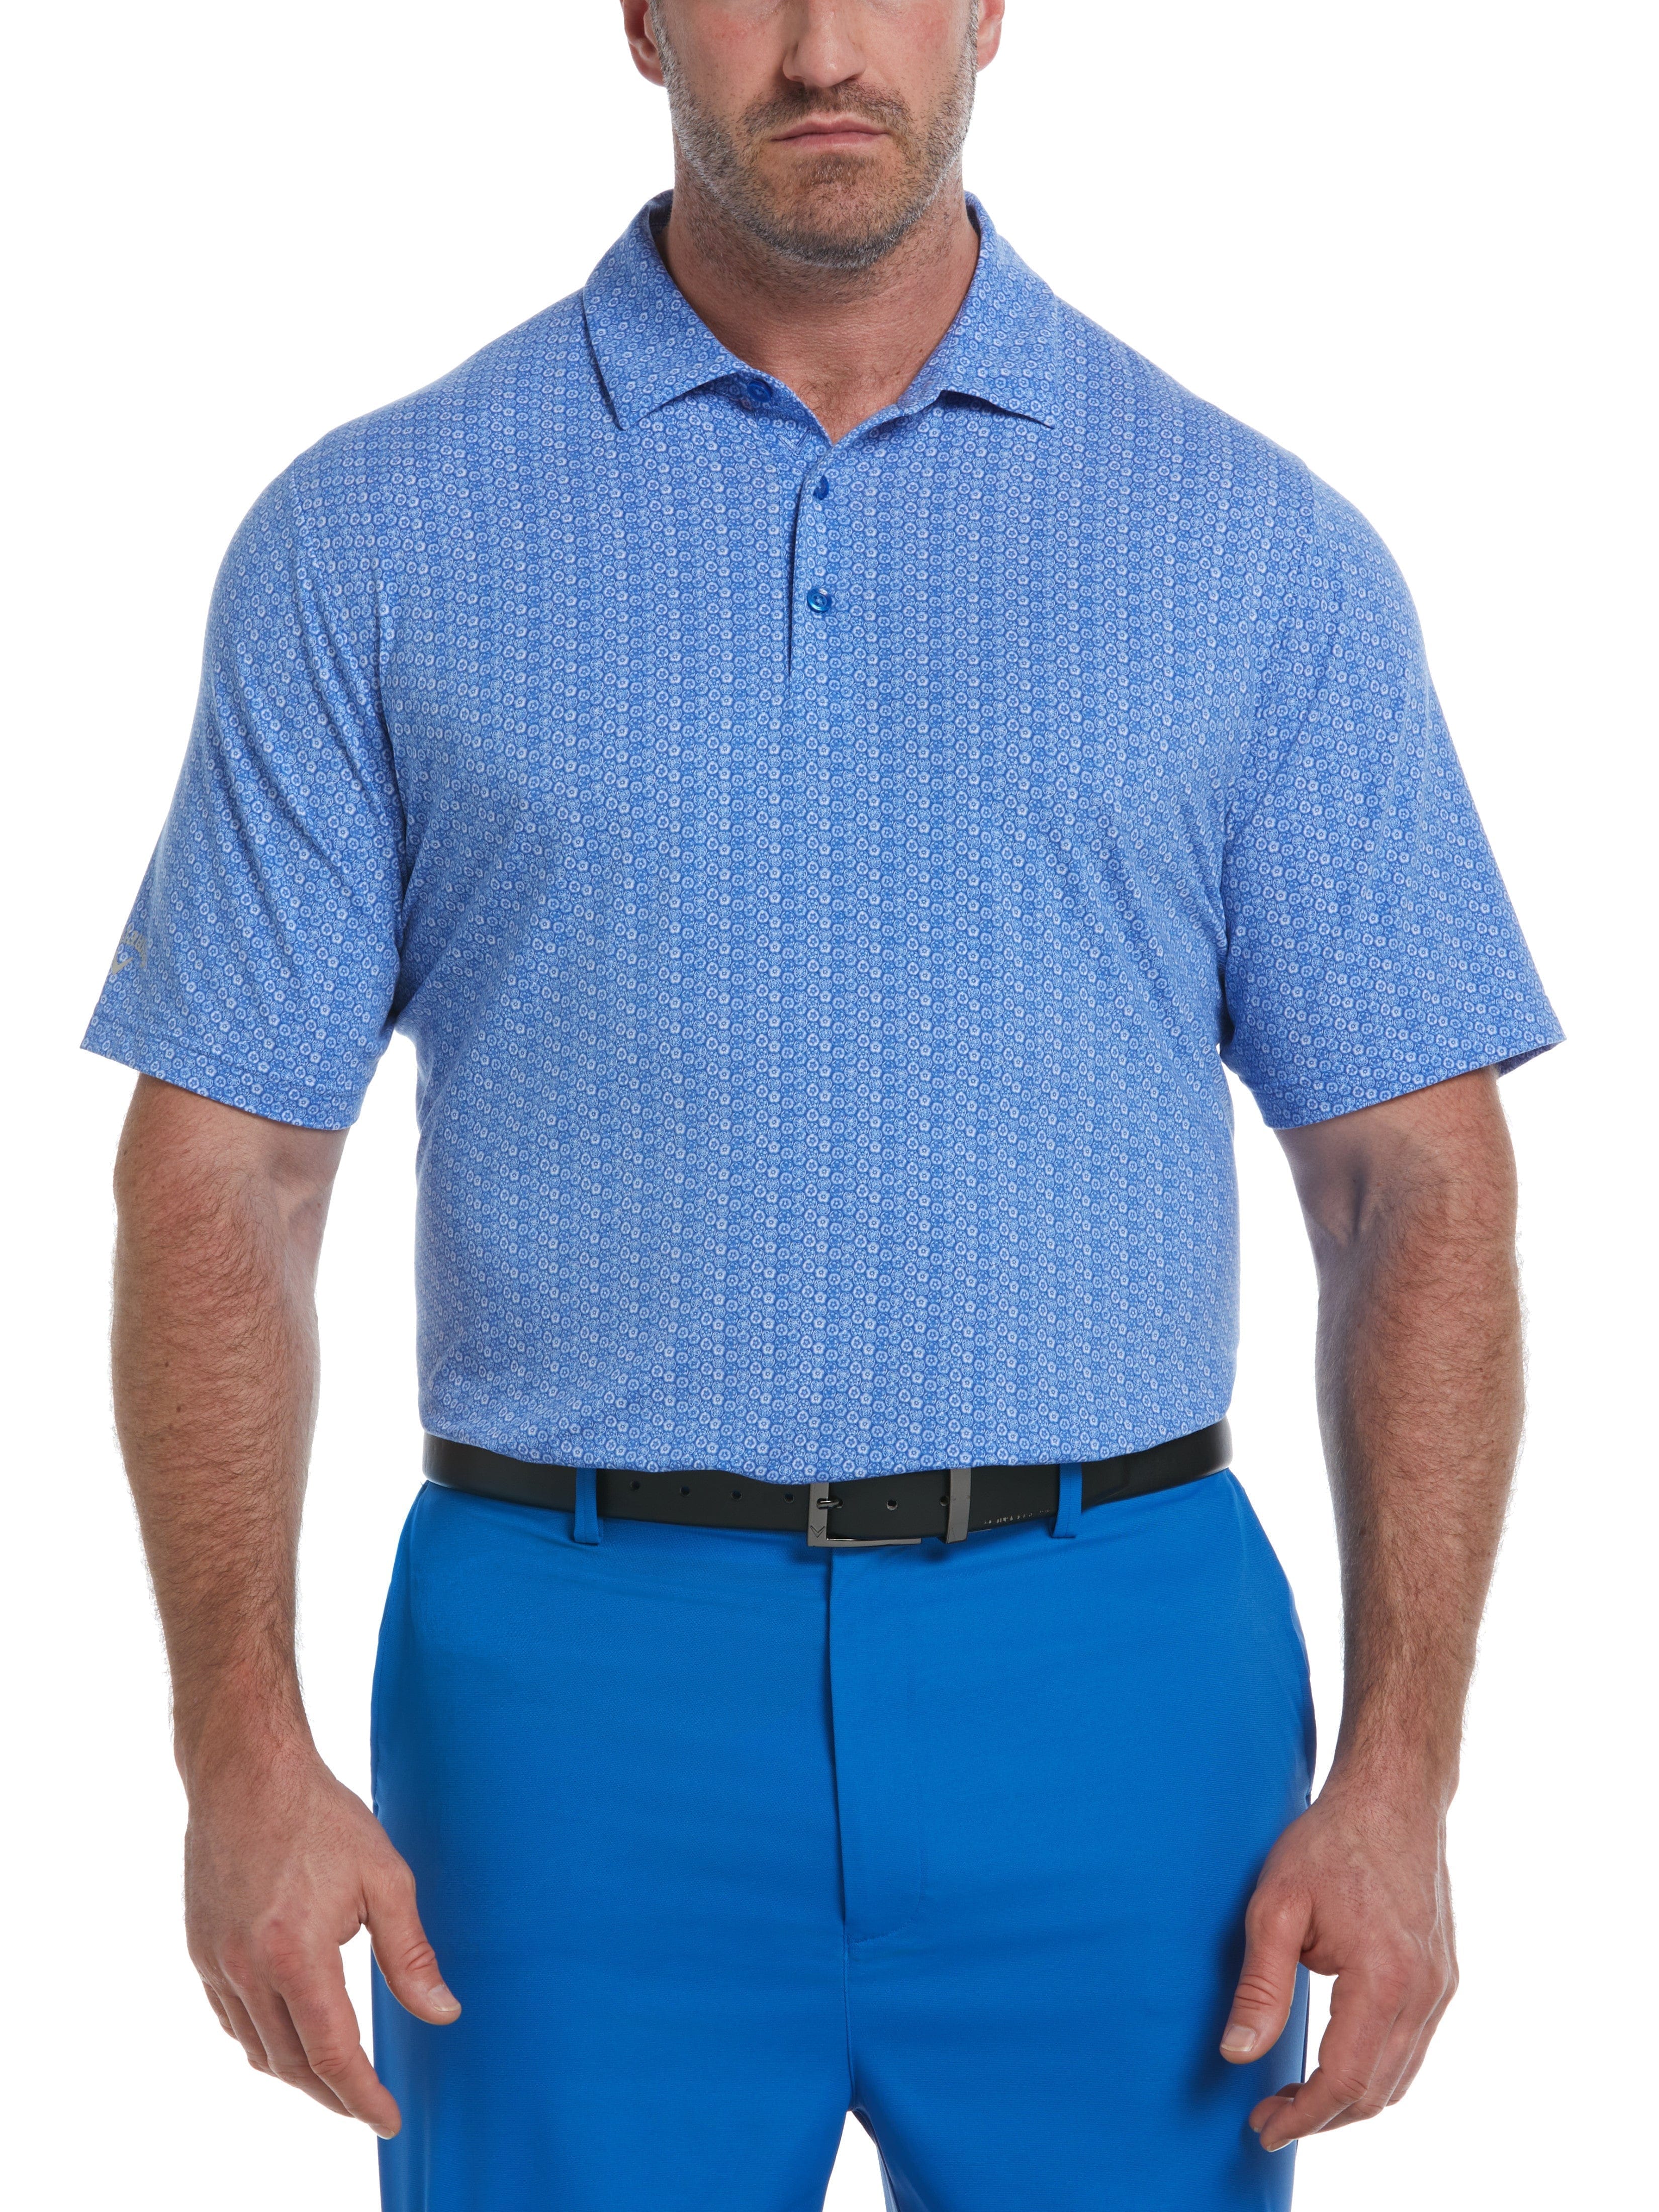 Callaway Apparel Mens Big & Tall Allover Tie Dye Foulard Print Golf Polo Shirt, Size 1X, Magnetic Blue, Polyester/Cotton/Elastane | Golf Apparel Shop